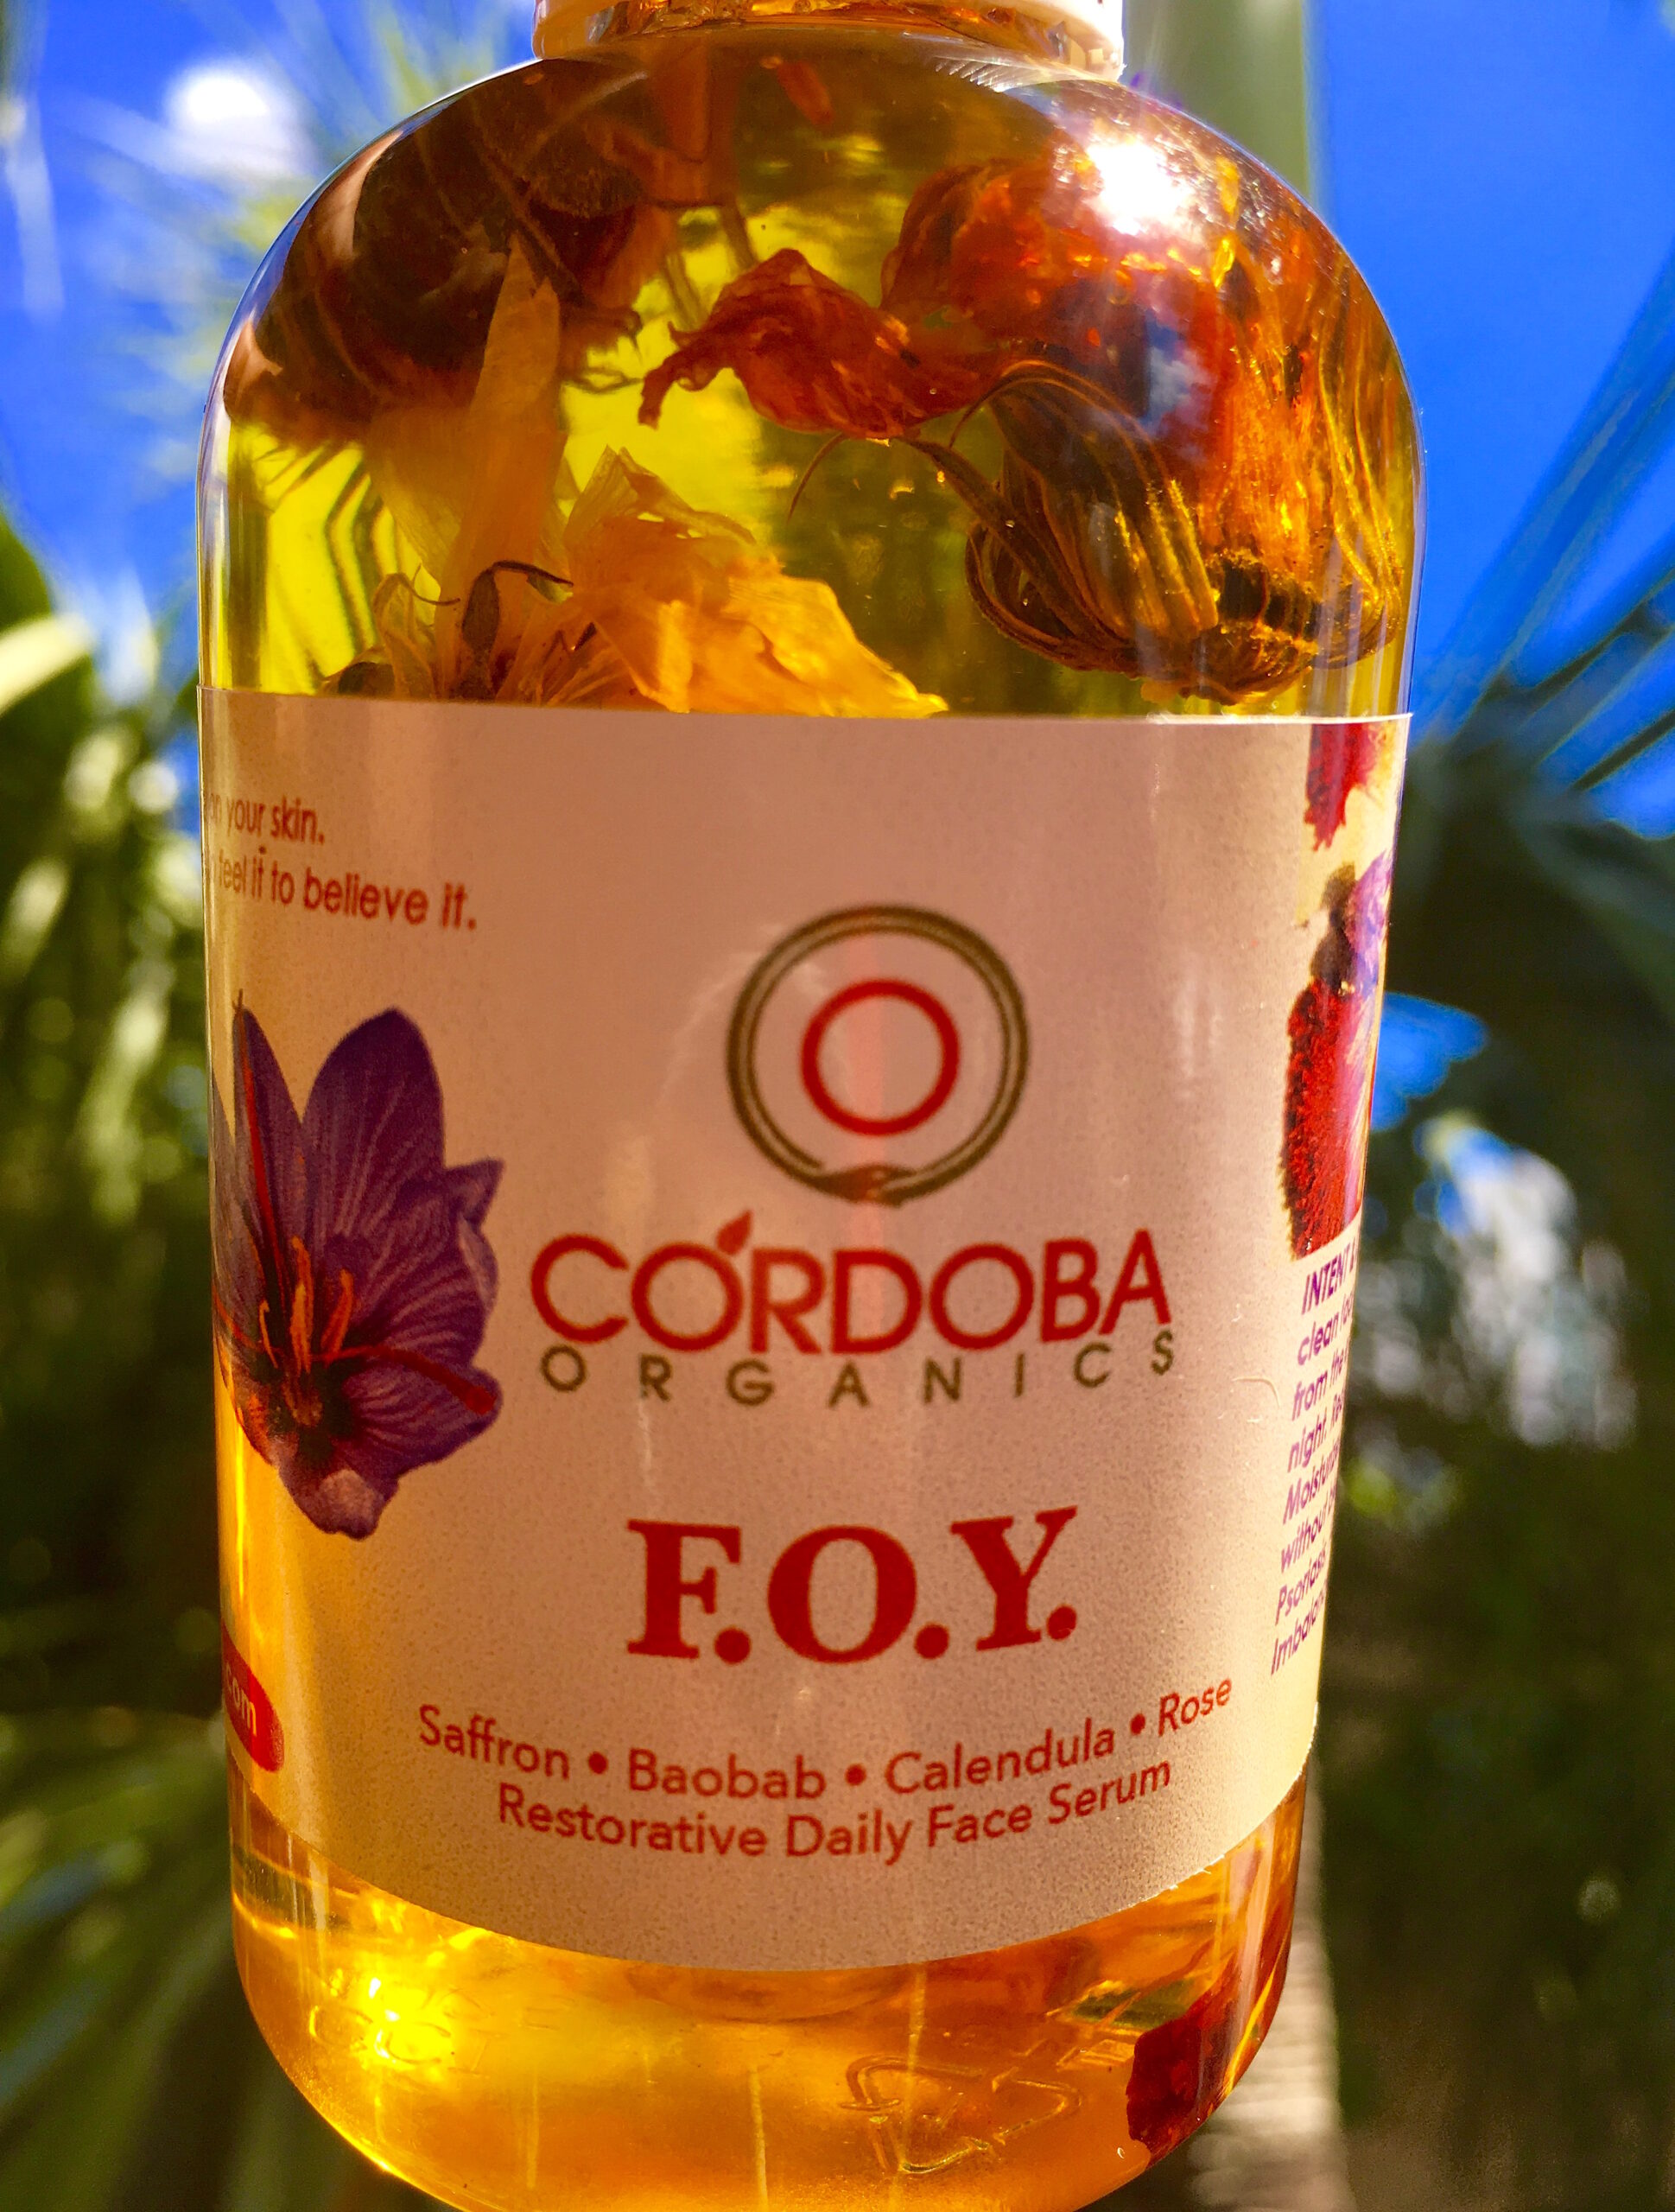 Fountain Of Youth "F.O.Y." Organic Saffron Baobab Calendula Rose Restorative Daily Face Serum. Heal. Restore. Hydrate.